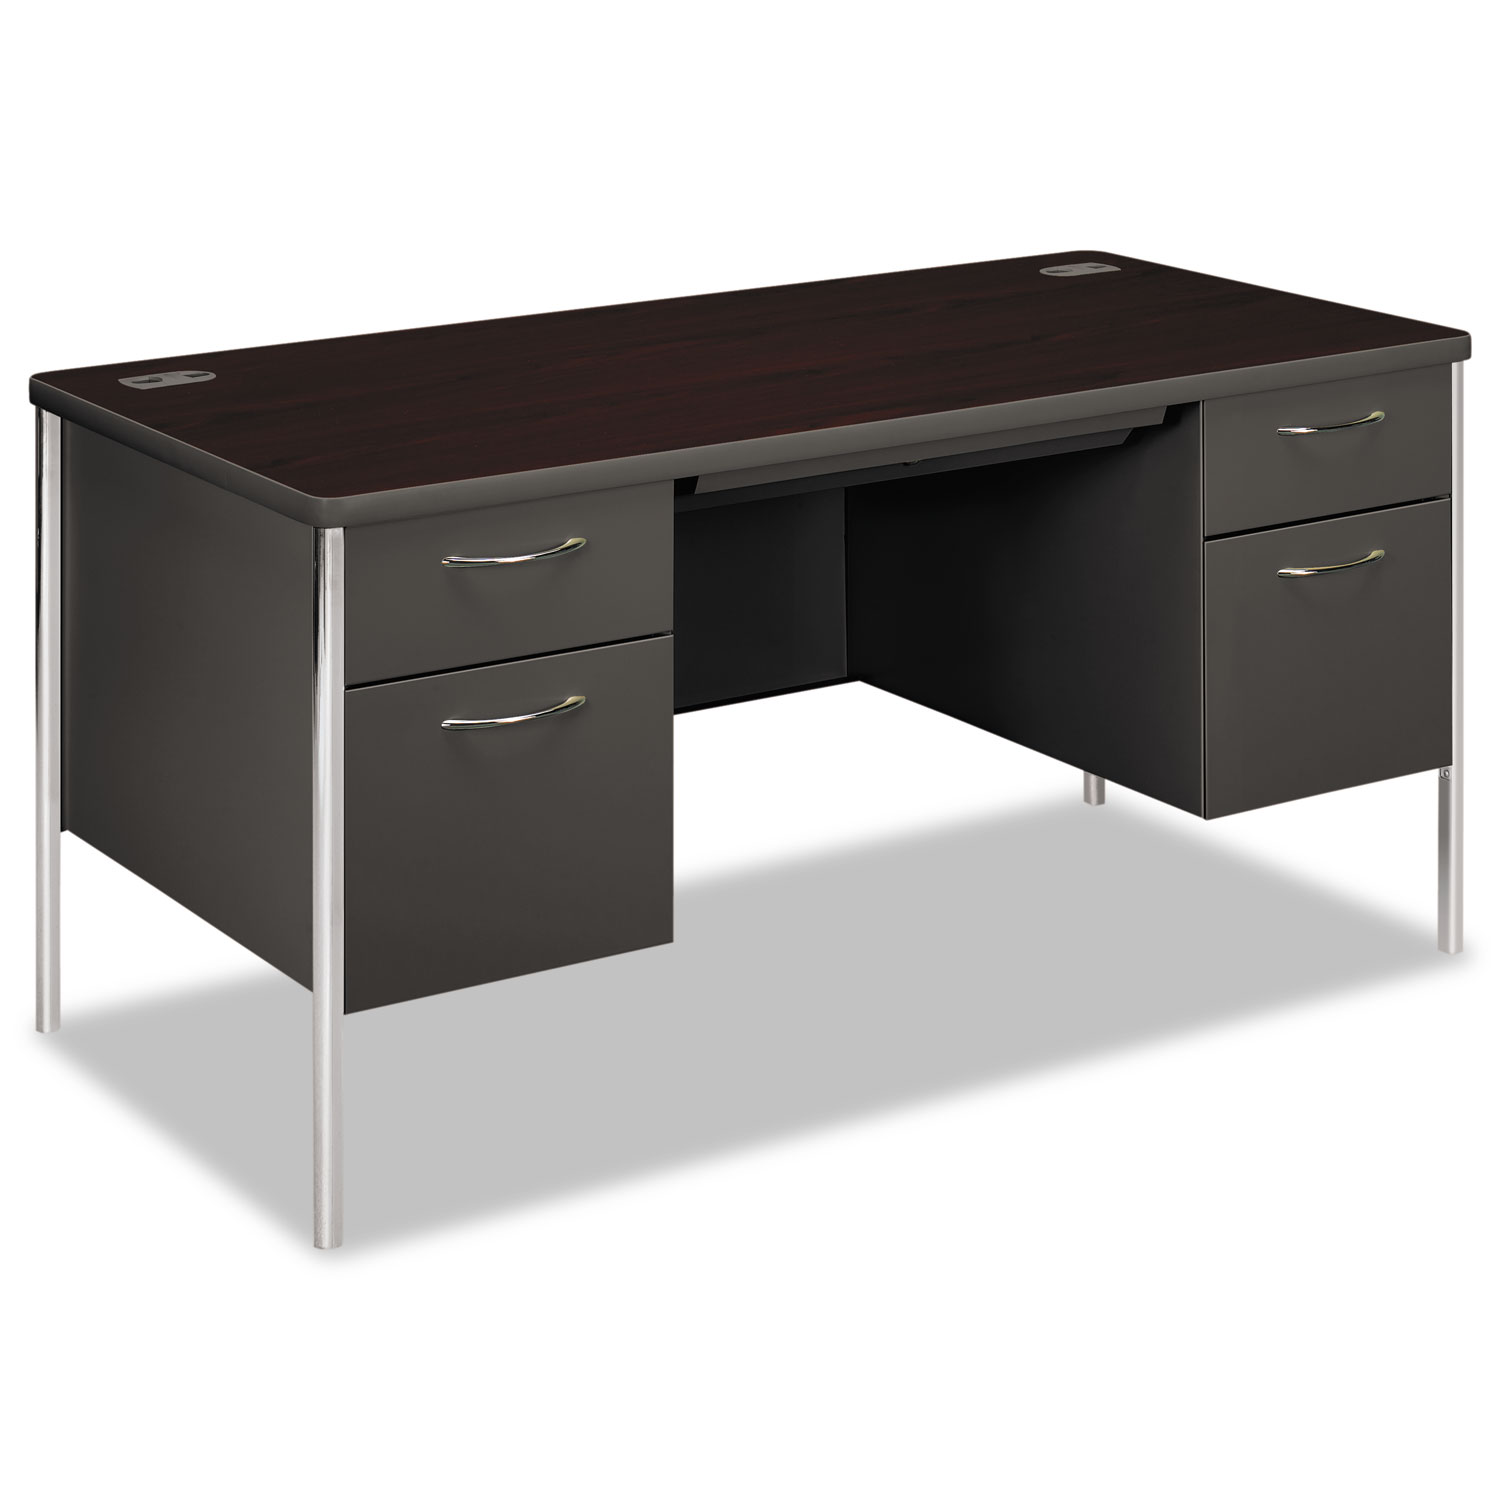 Mentor Series Double Pedestal Desk, 60w x 30d x 29-1/2h, Mahogany/Charcoal